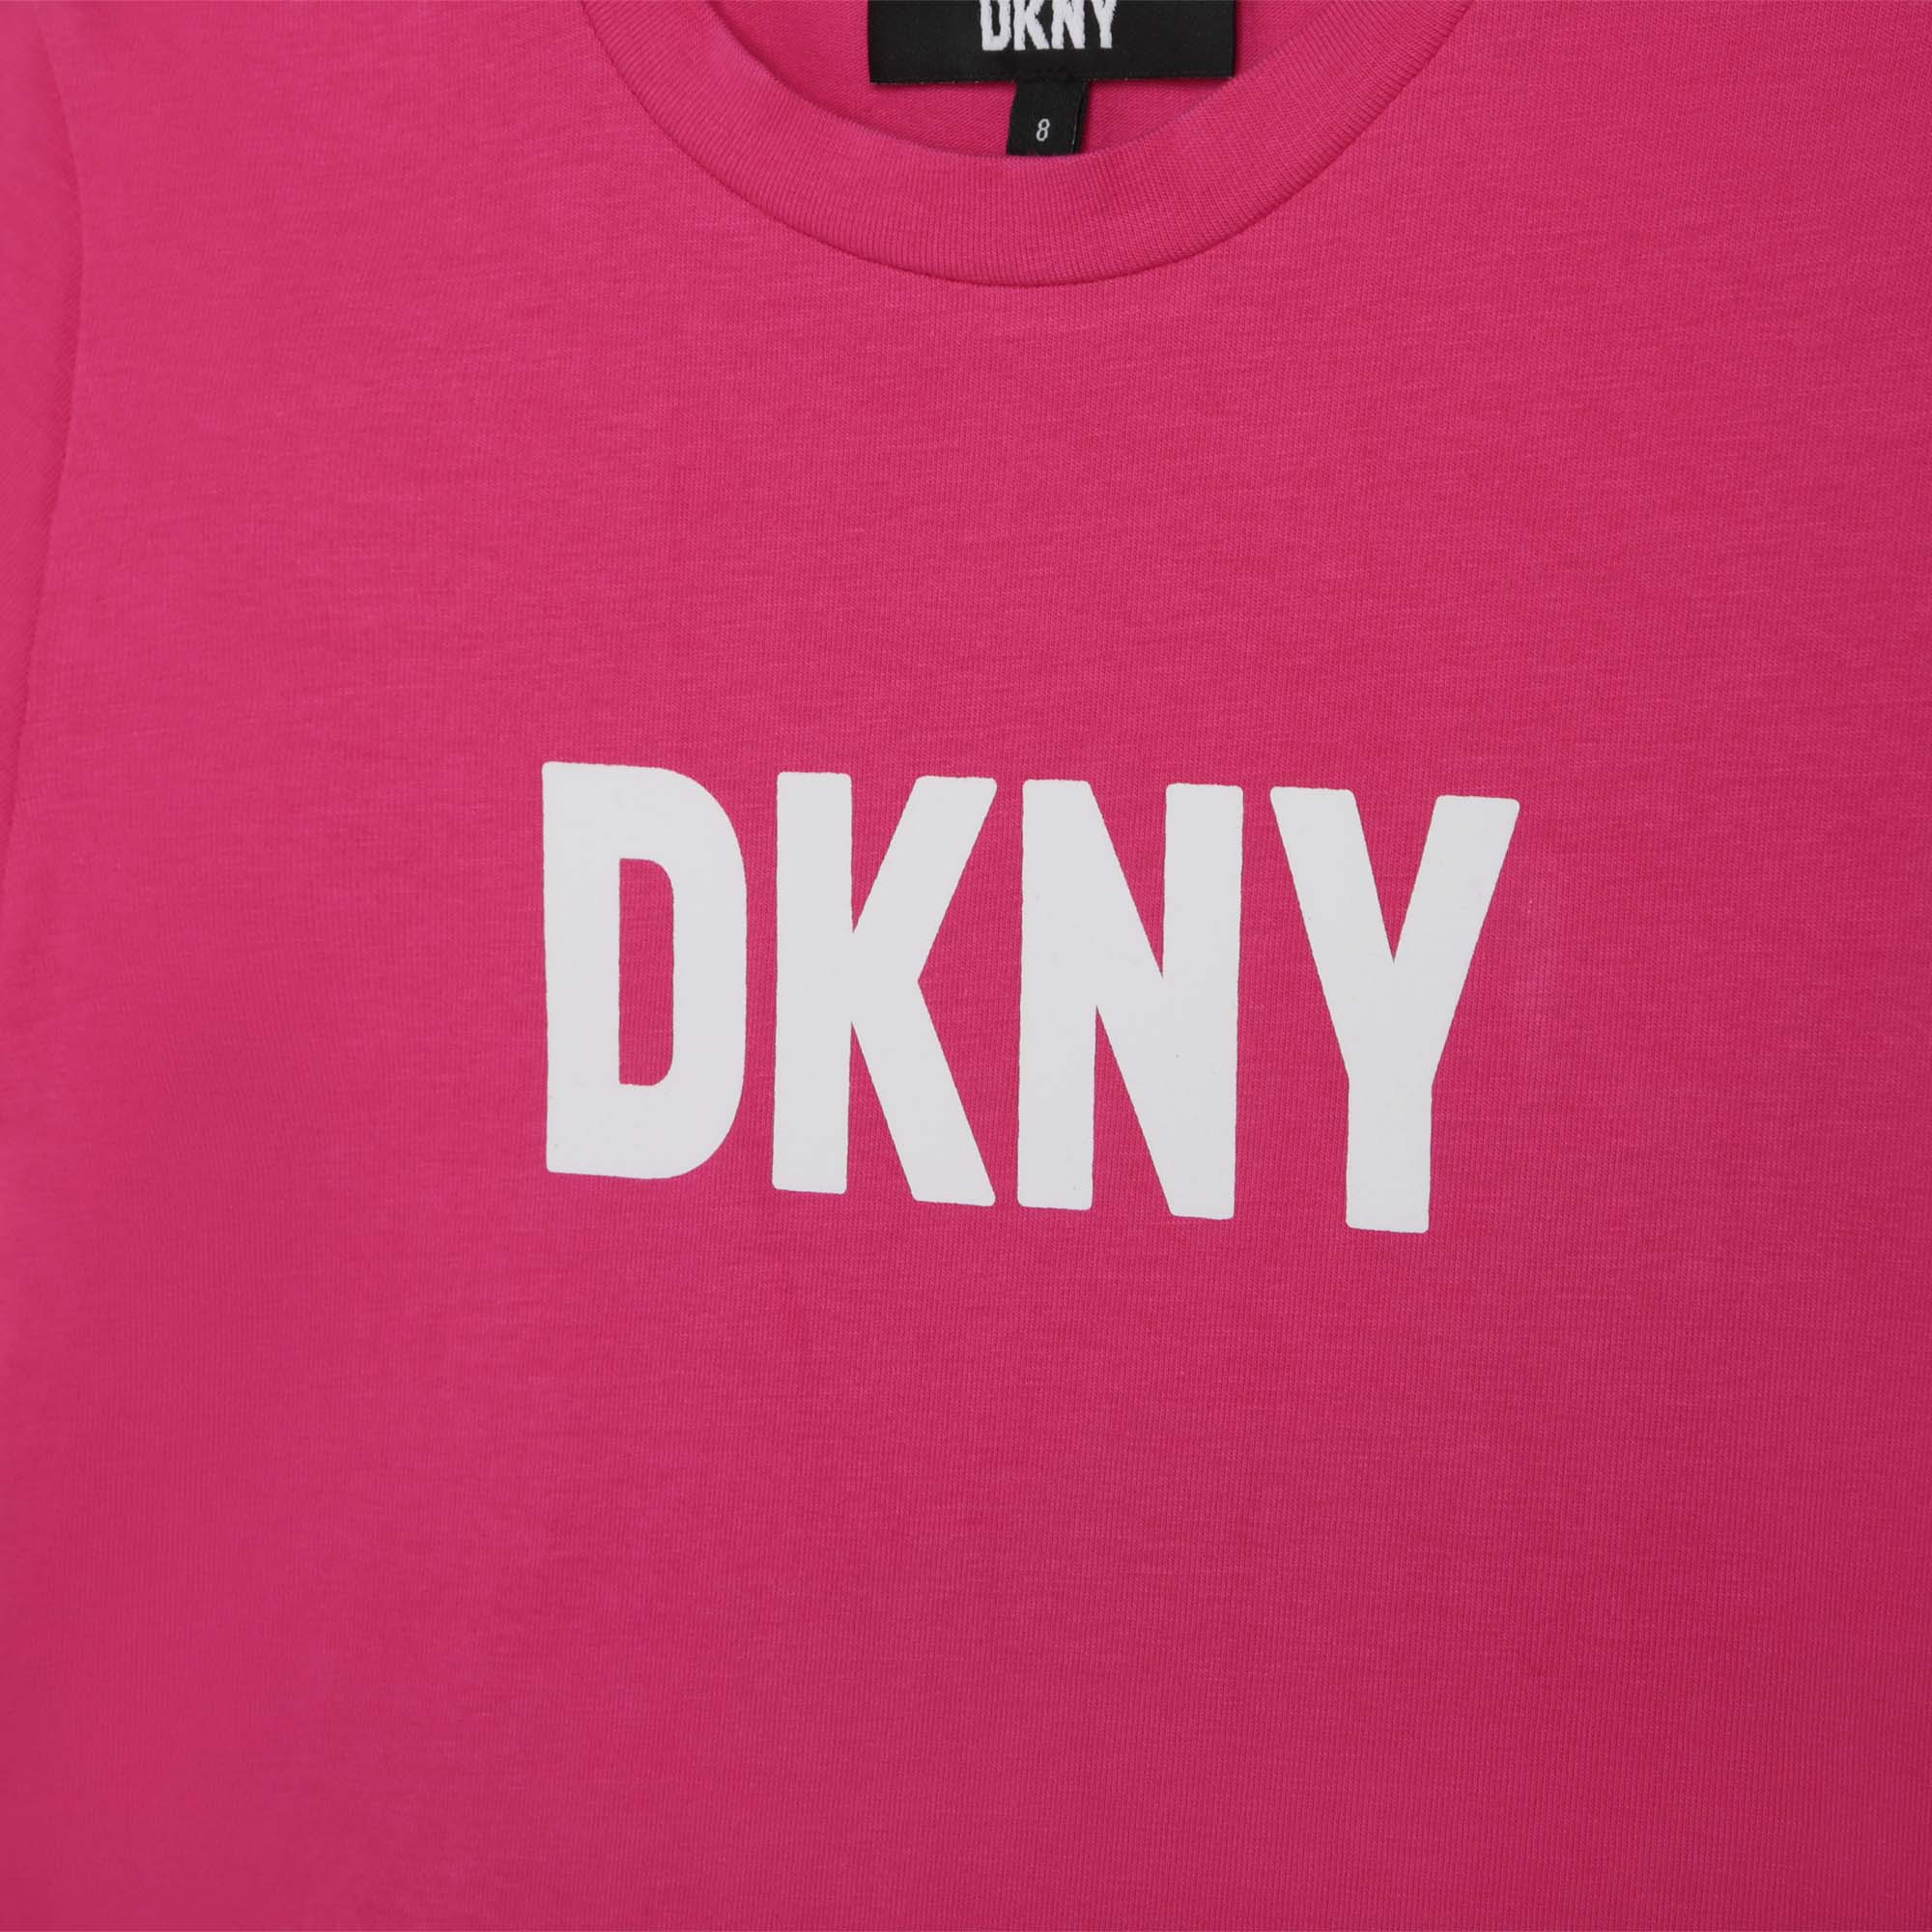 DKNY girls pink tshirt close up